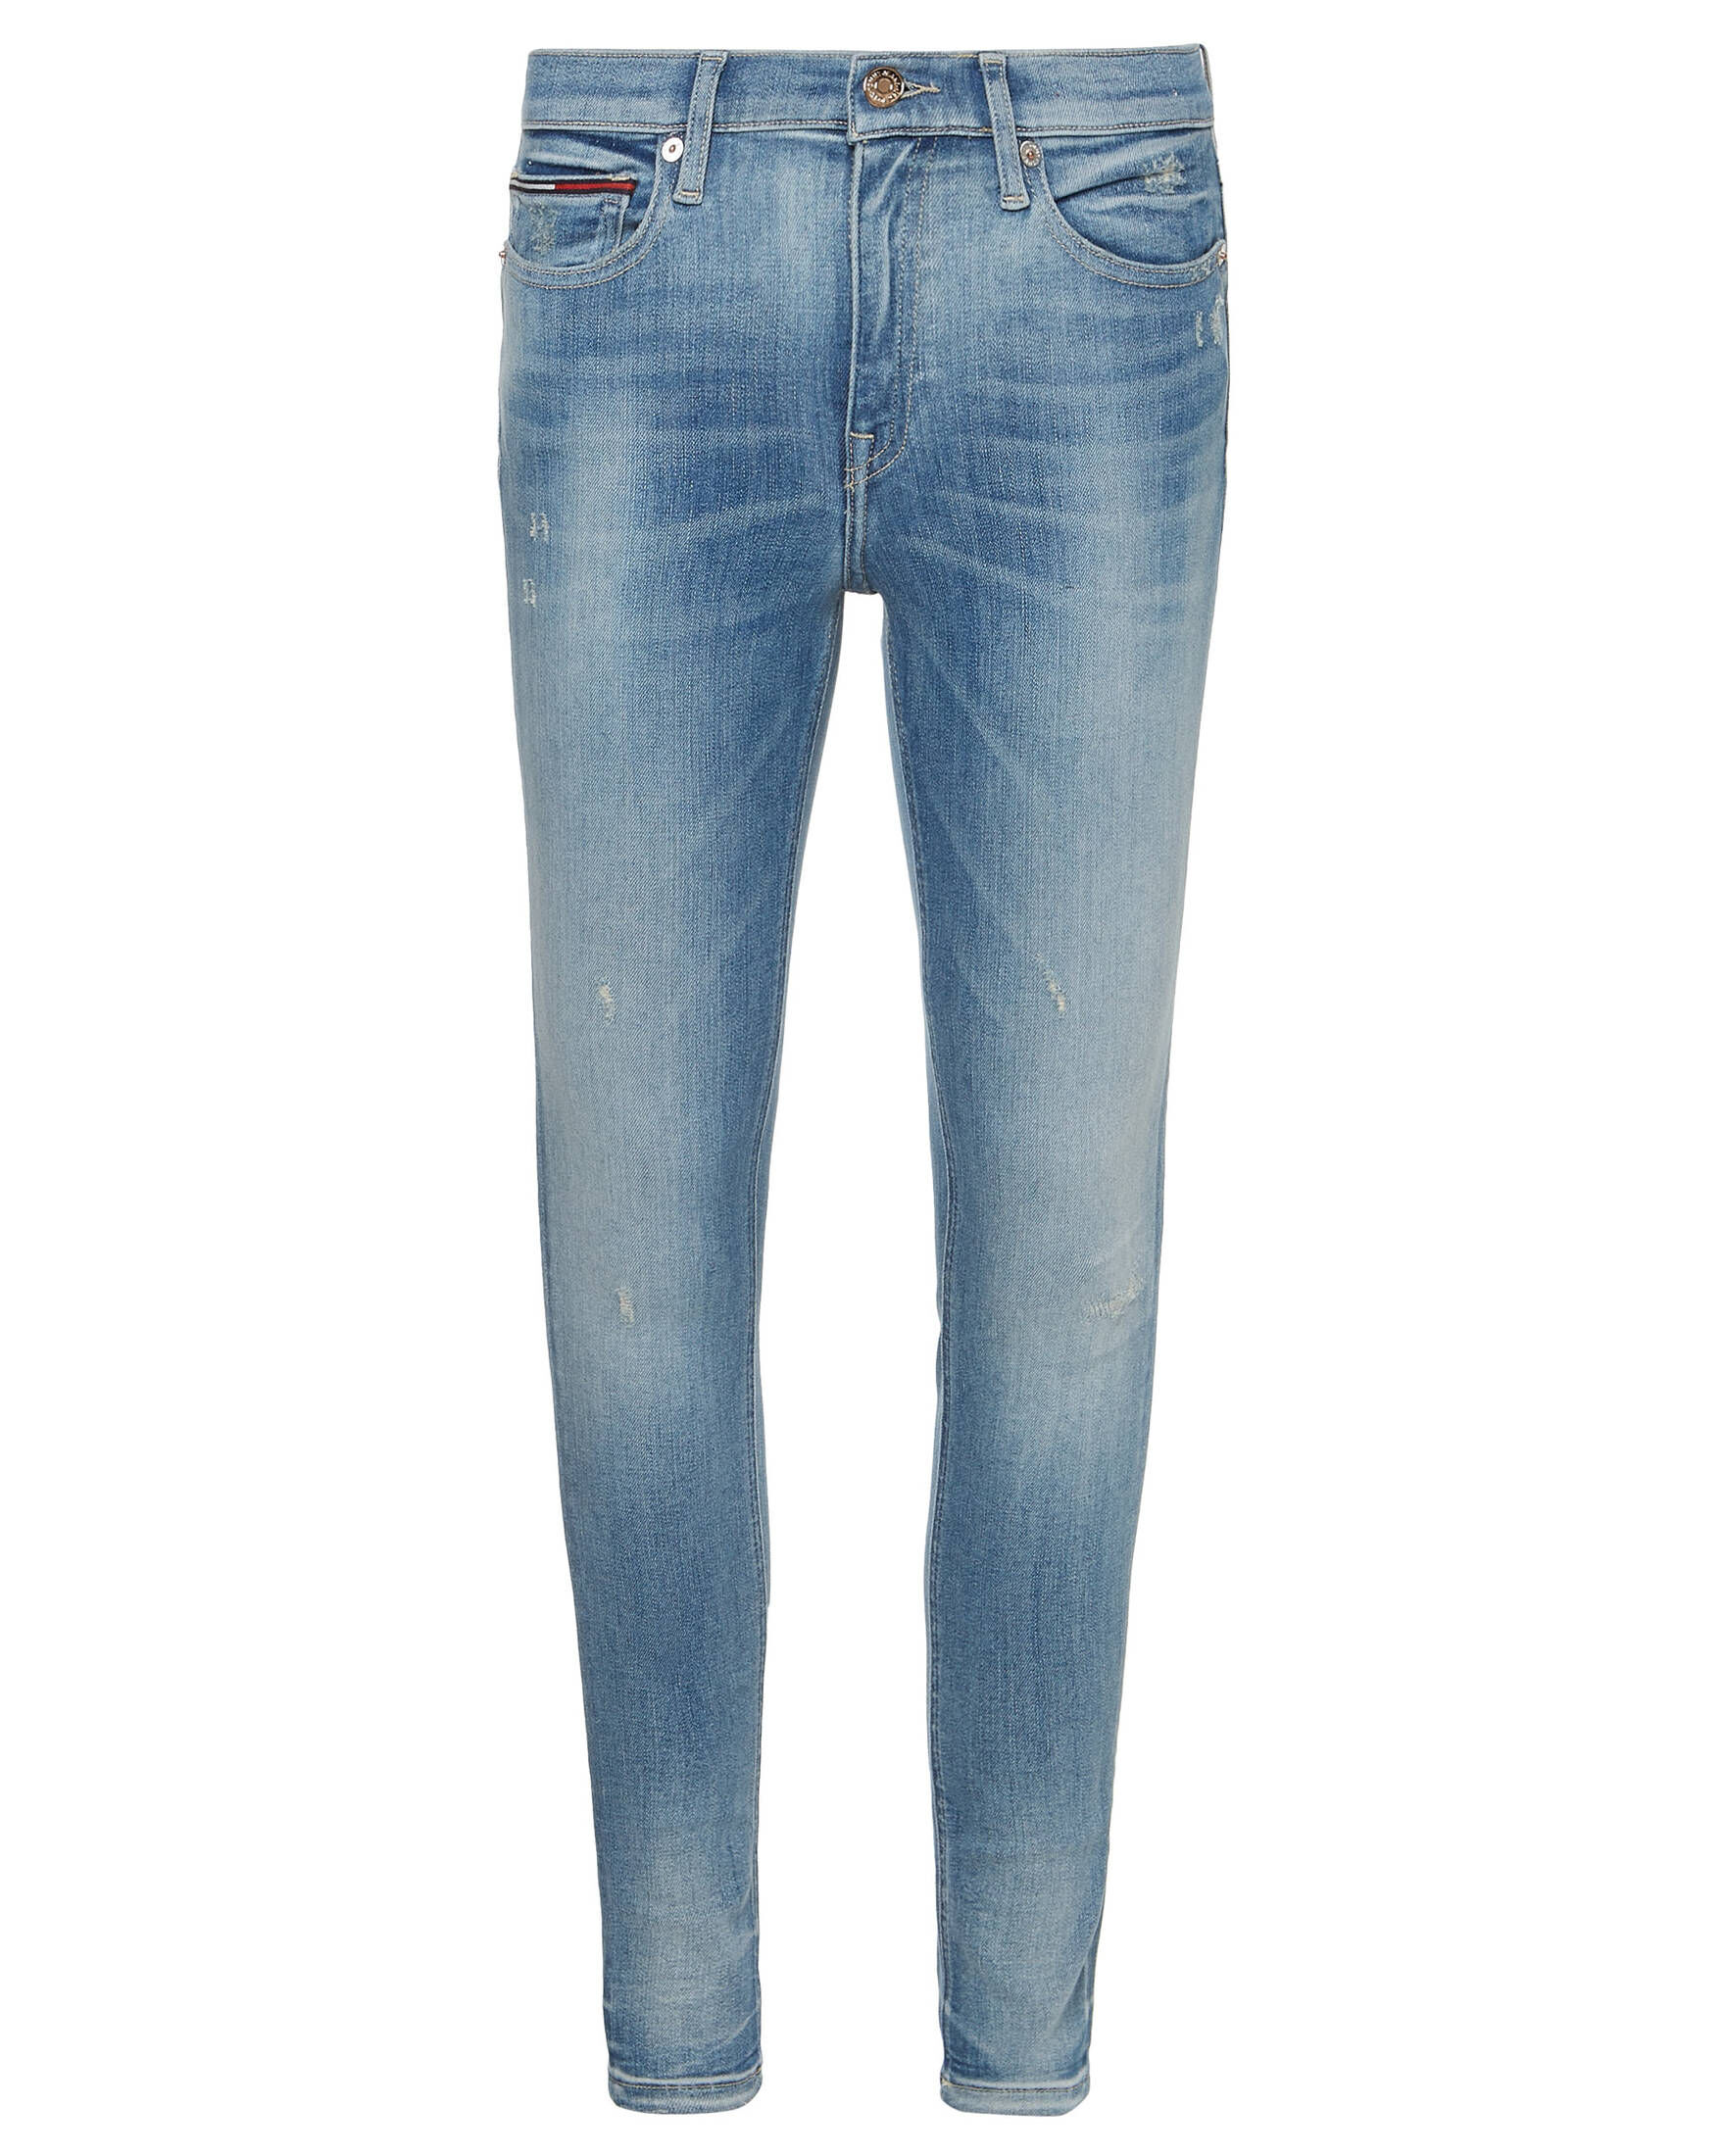 Tommy Jeans| Damen Jeans NORA Skinny Fit